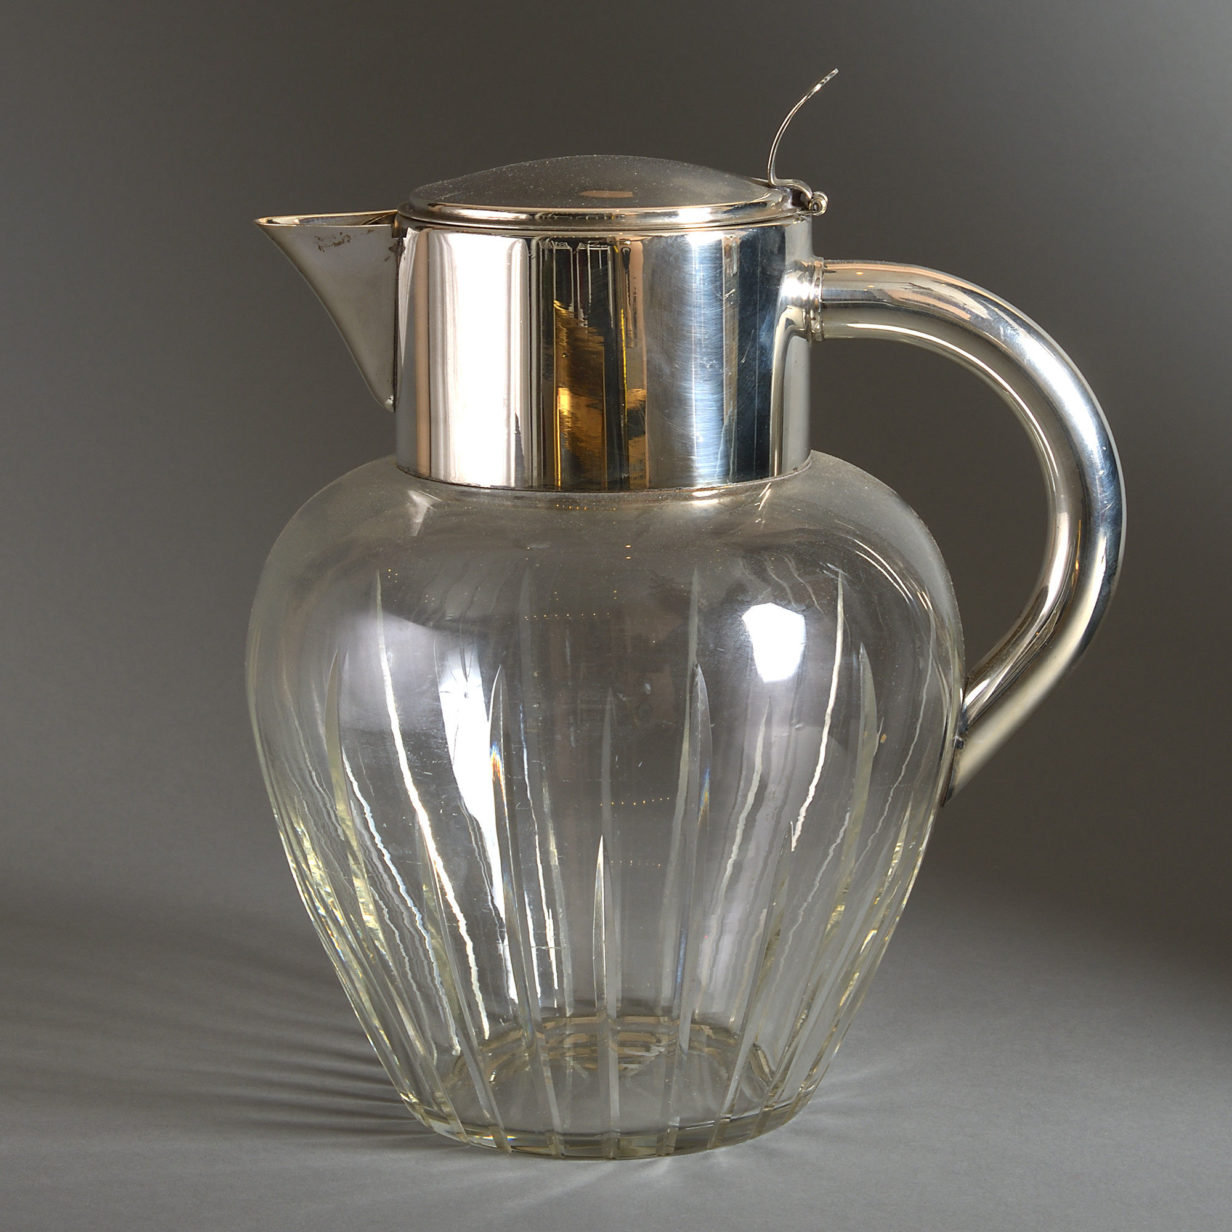 Early 20th century glass & silver-plated lemonade jug